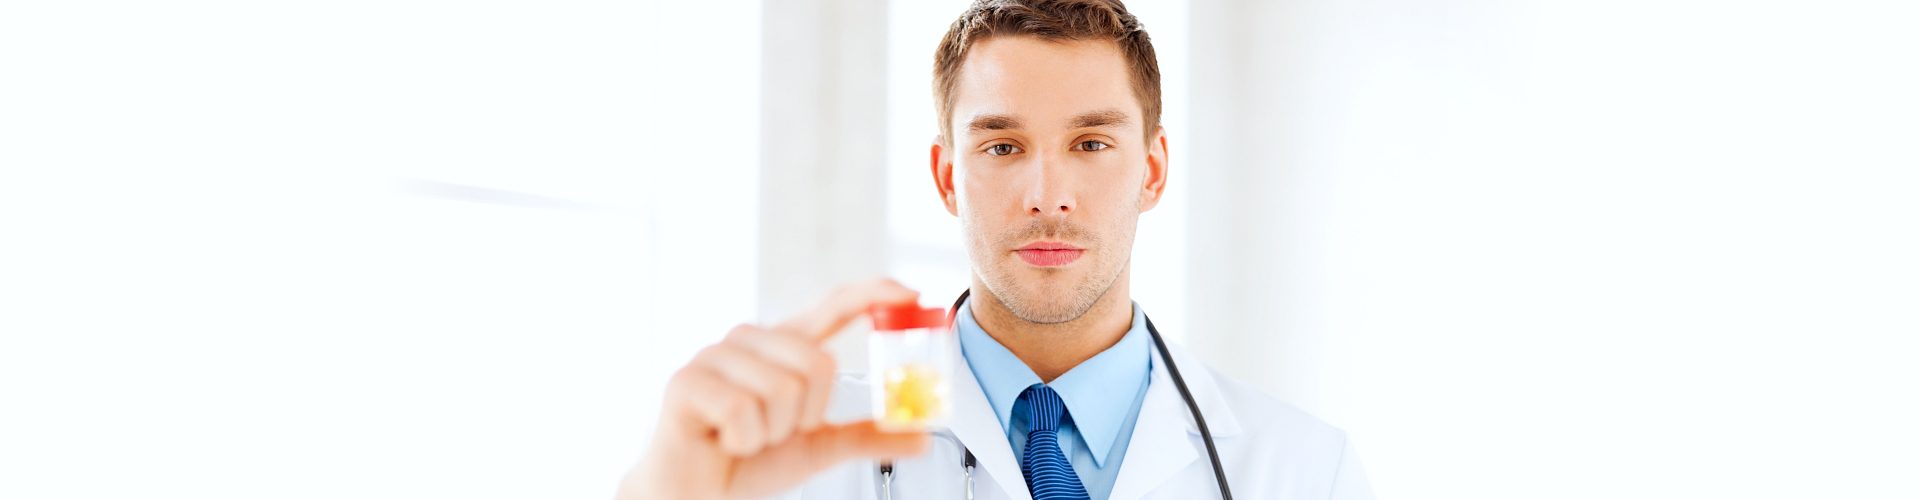 man holding medicine container